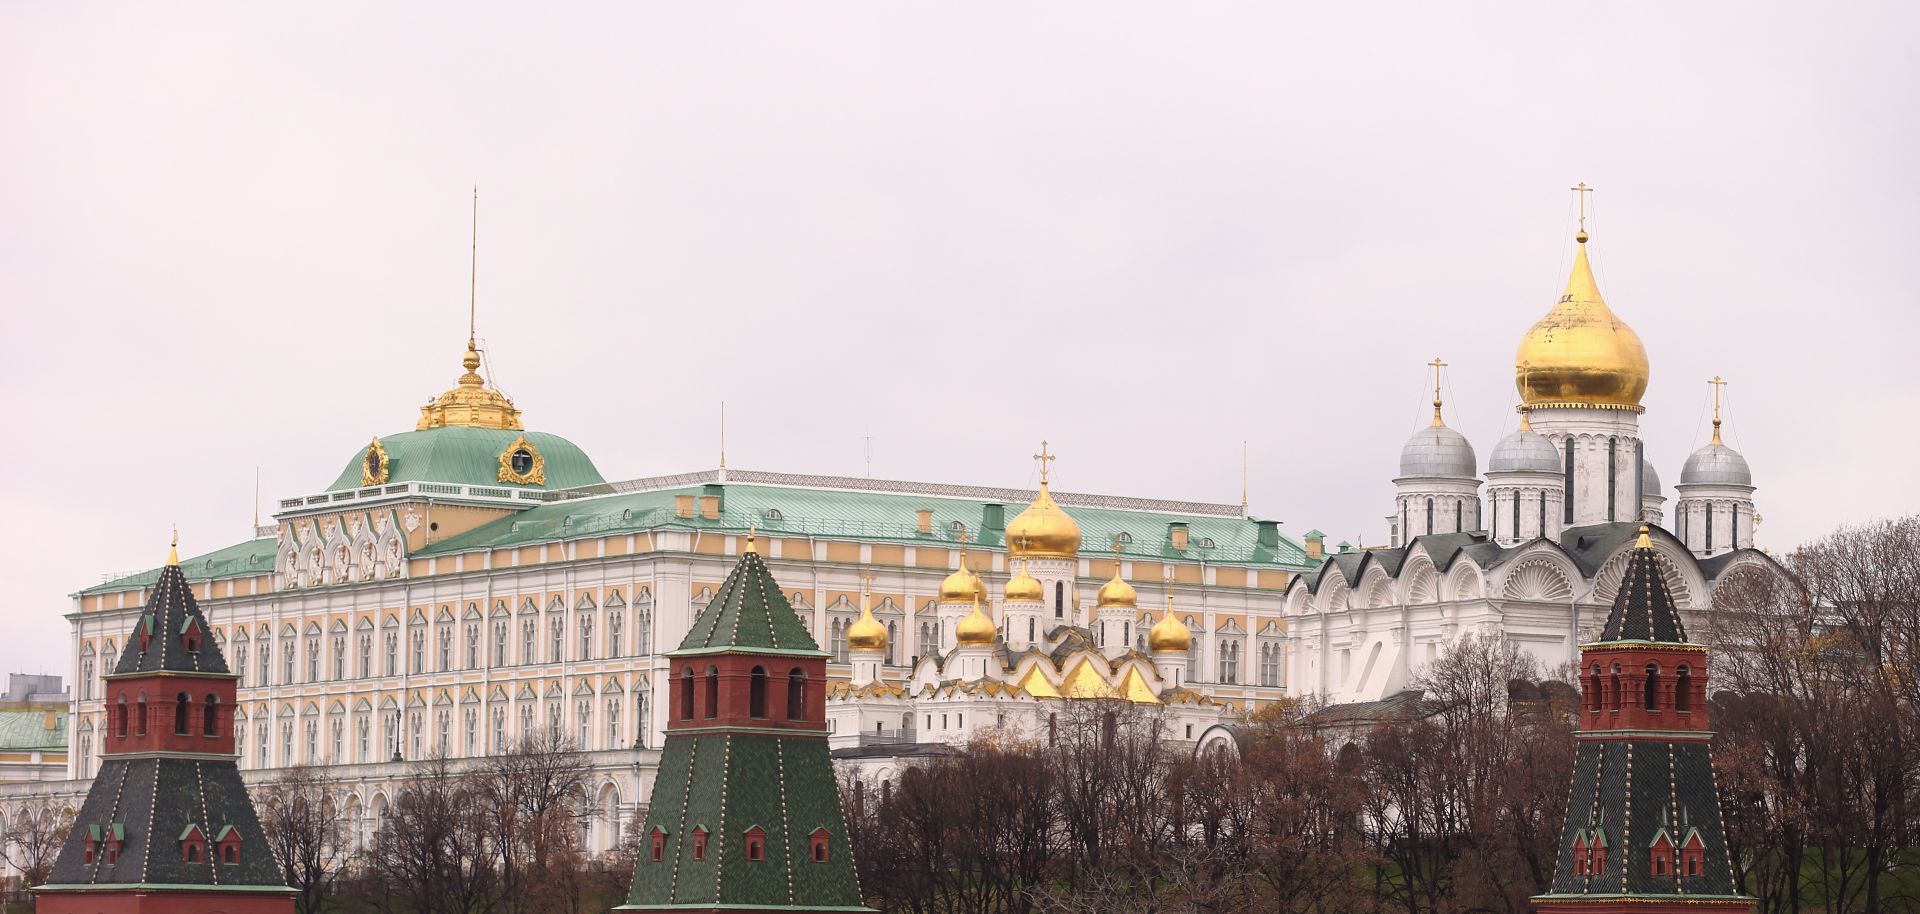 The gates of the Kremlin.